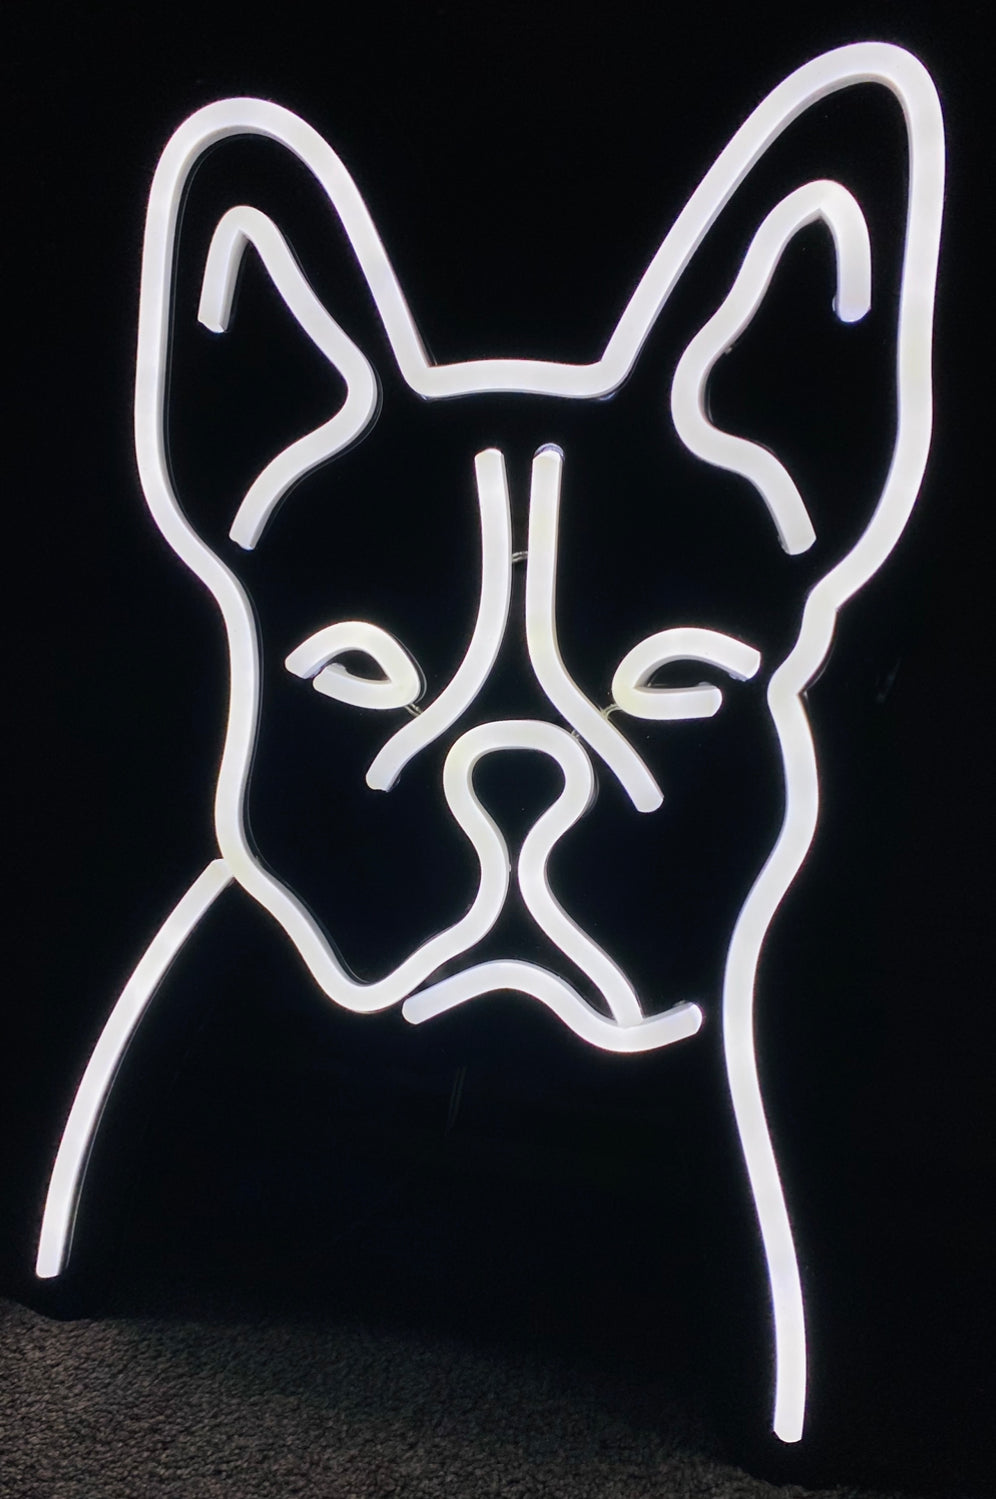 French Bulldog LED Neon Sign